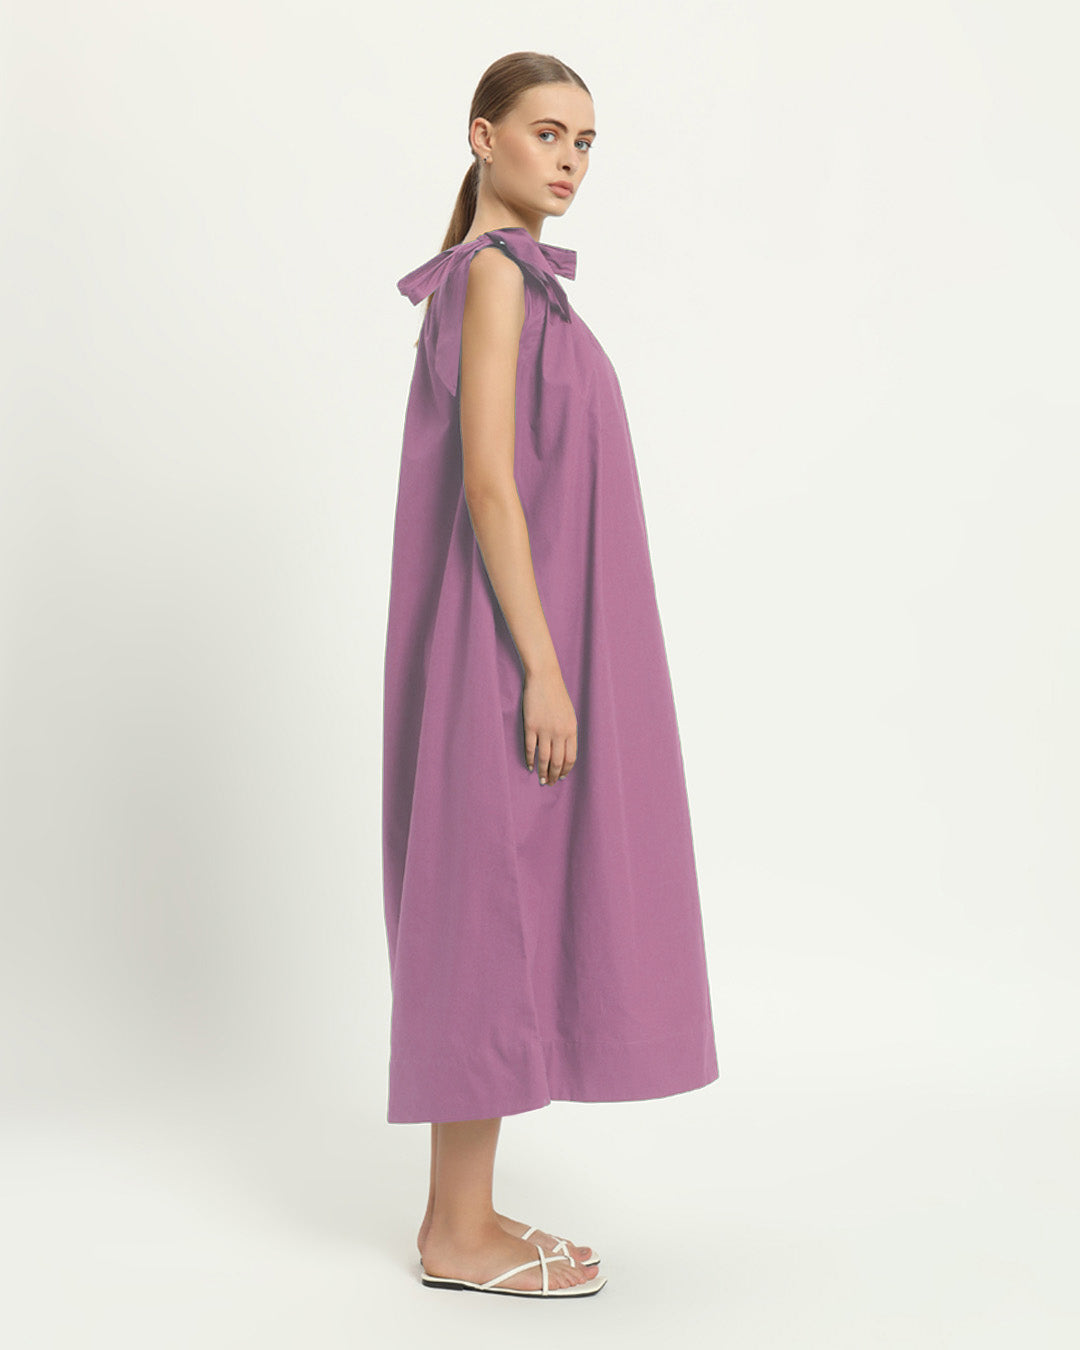 The Strehla Purple Swirl Cotton Dress